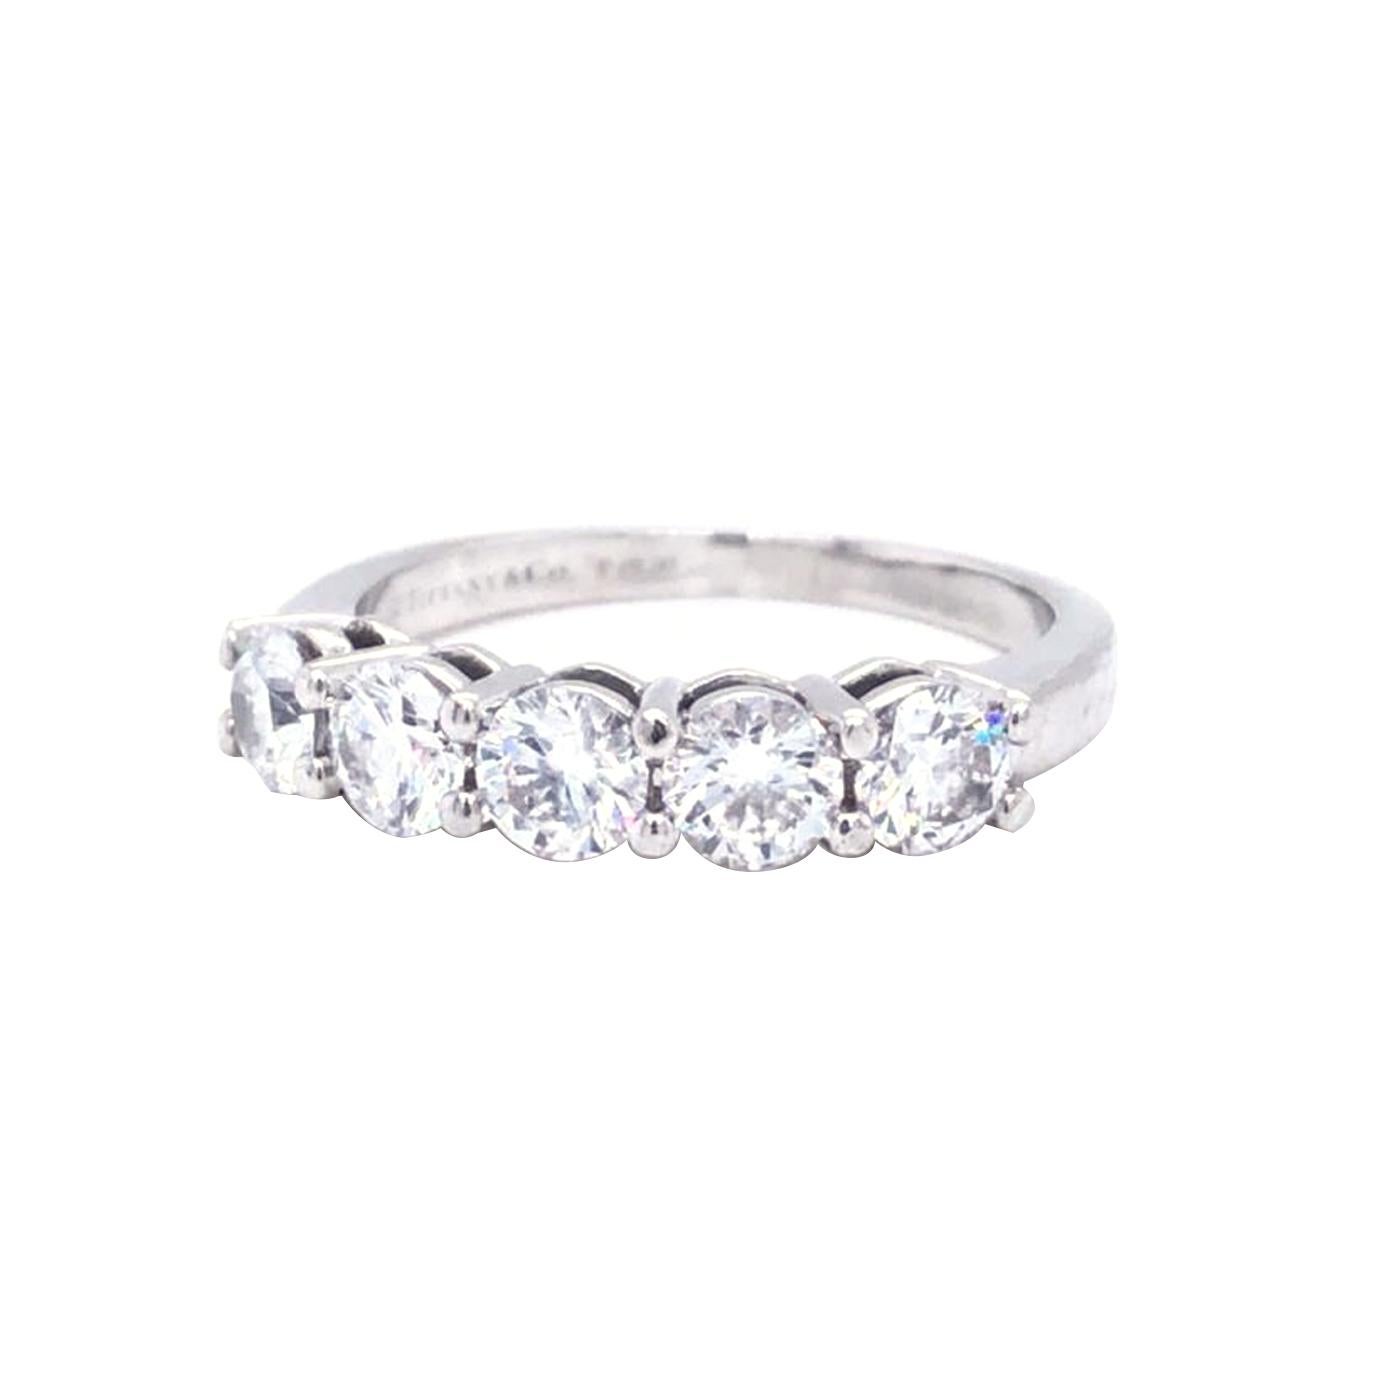 One Tiffany & co. platinum and diamond band ring, prong set with five range, VVS1 - VVS2 clarity range.

Details:
Diamond Registration Number: 63905402/T03120748
Shape: Round
Cut: Brilliant
Measurements: 4.09 - 4.12 x 2.53mm

Precision Cut: